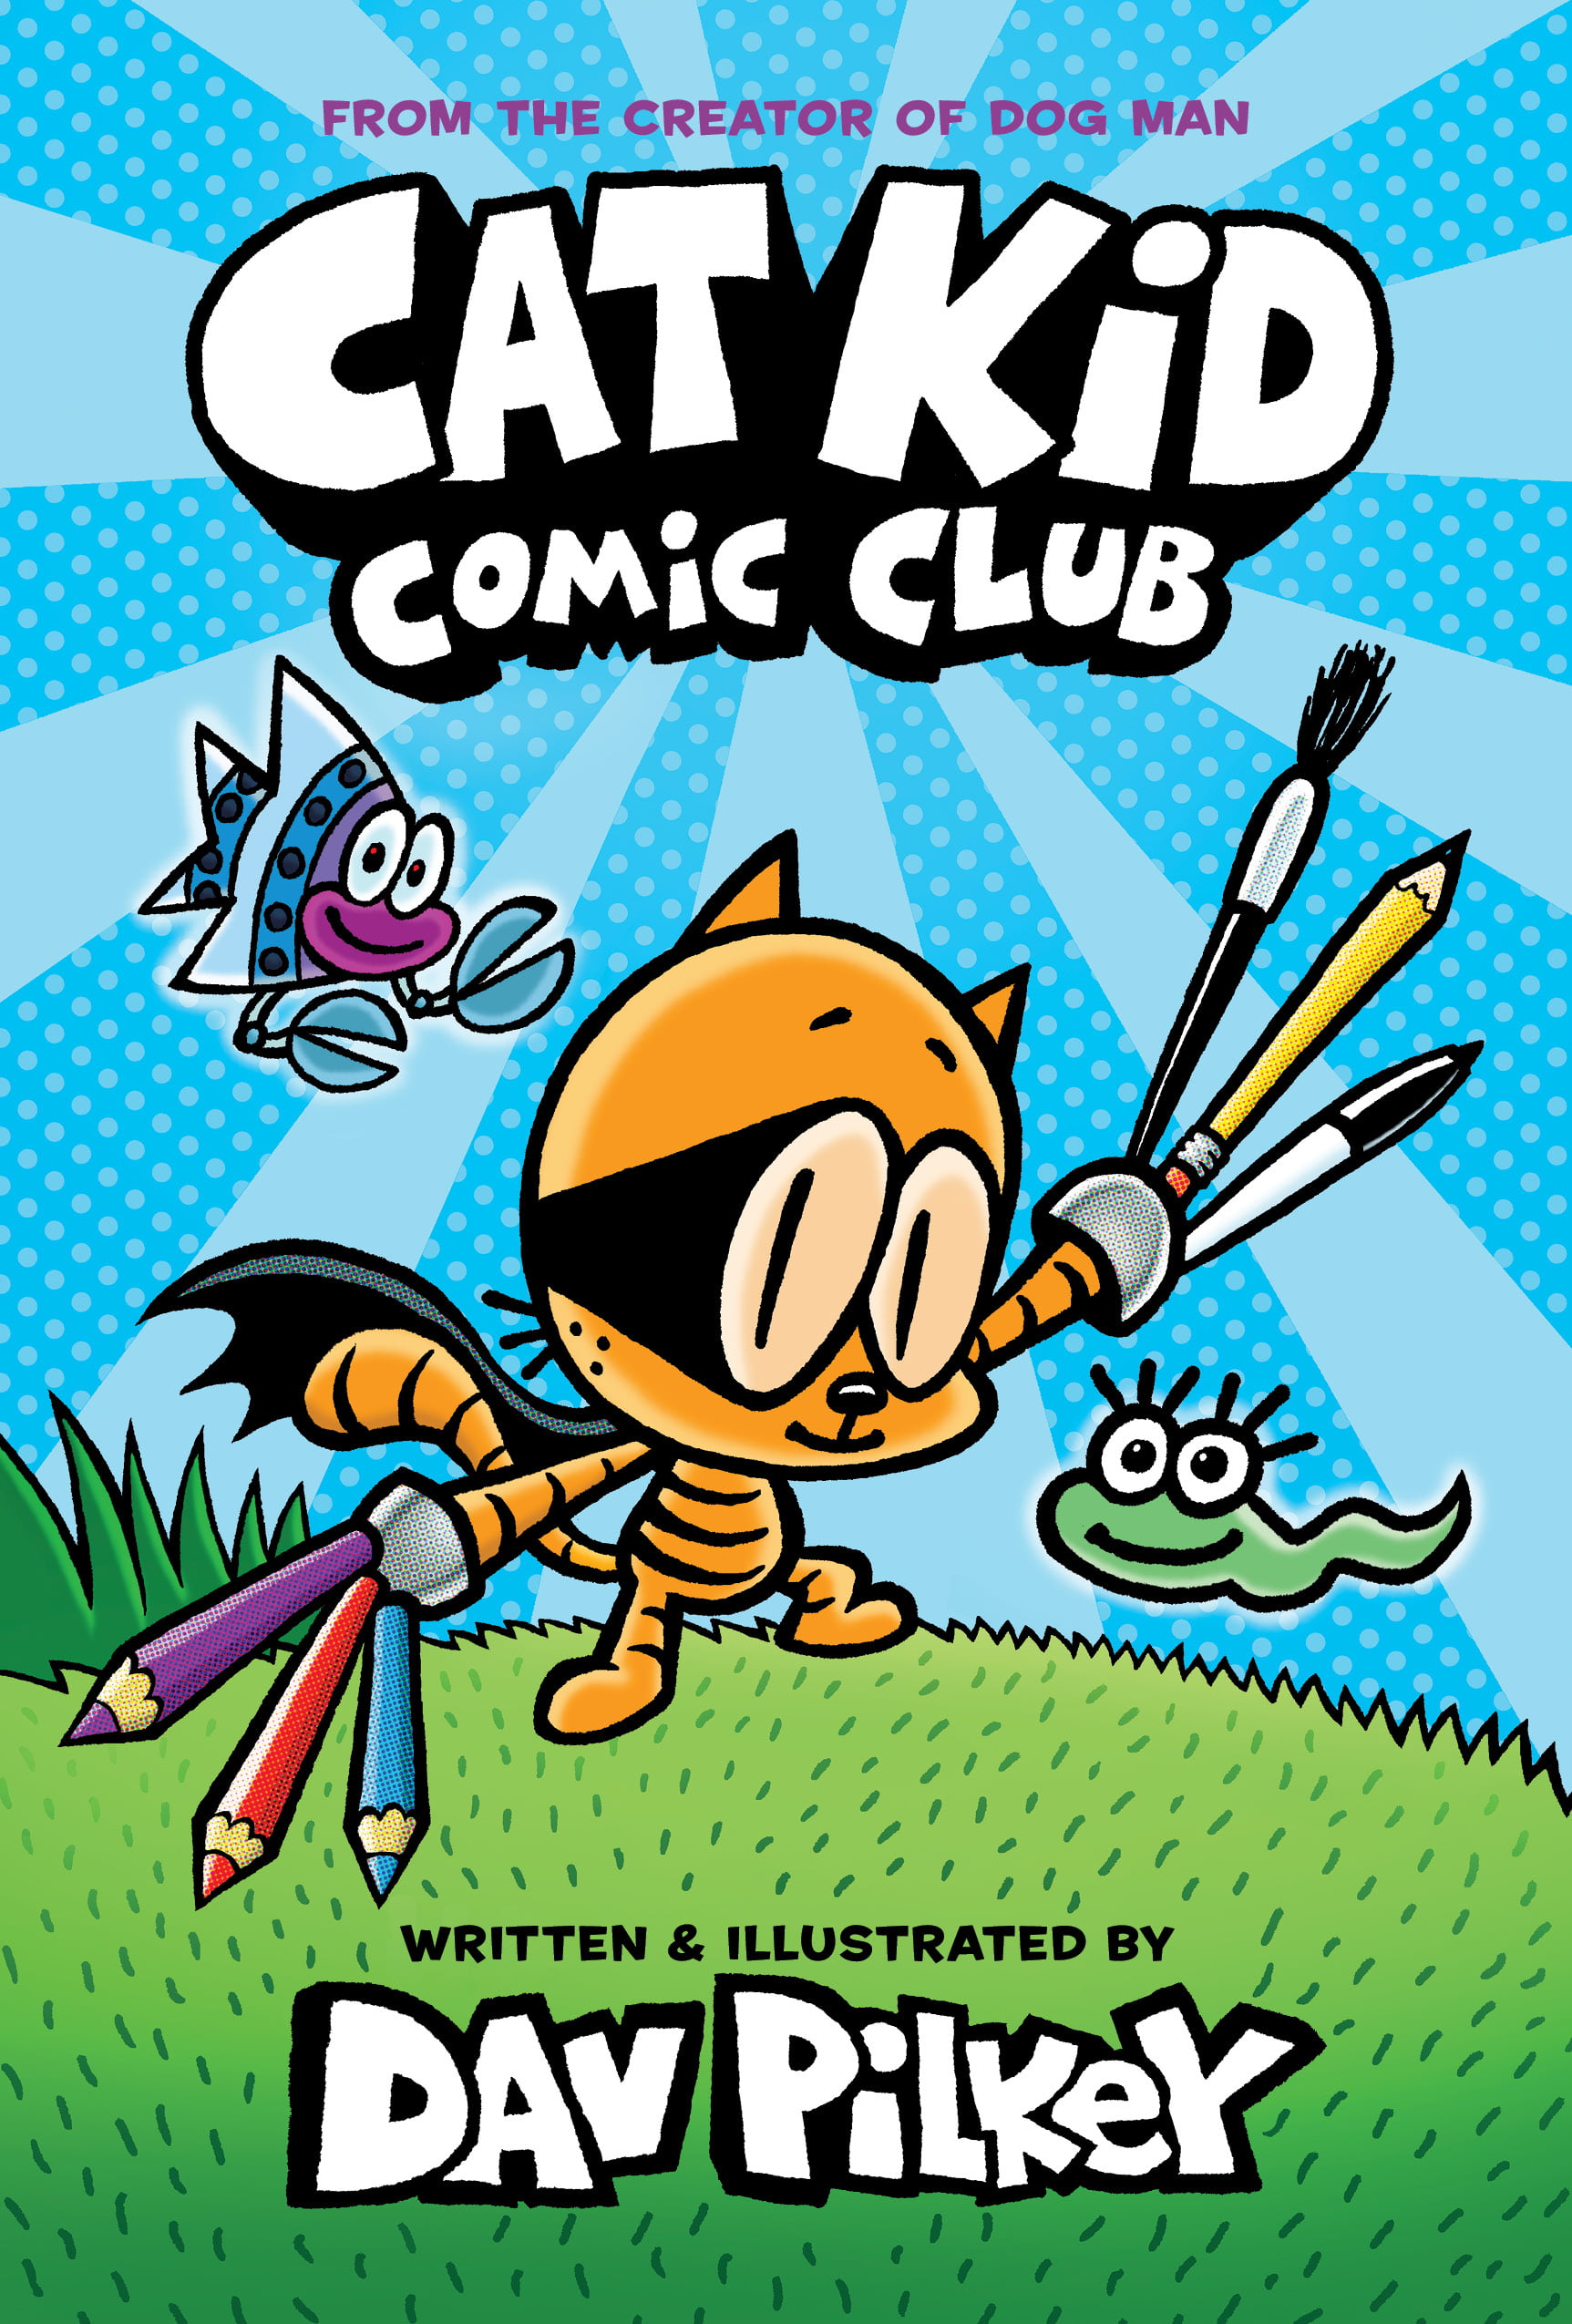 Cat Kid Comic Club: Cat Kid Comic Club: A Graphic Novel (Cat Kid Comic Club #1): From the Creator of Dog Man (Hardcover)